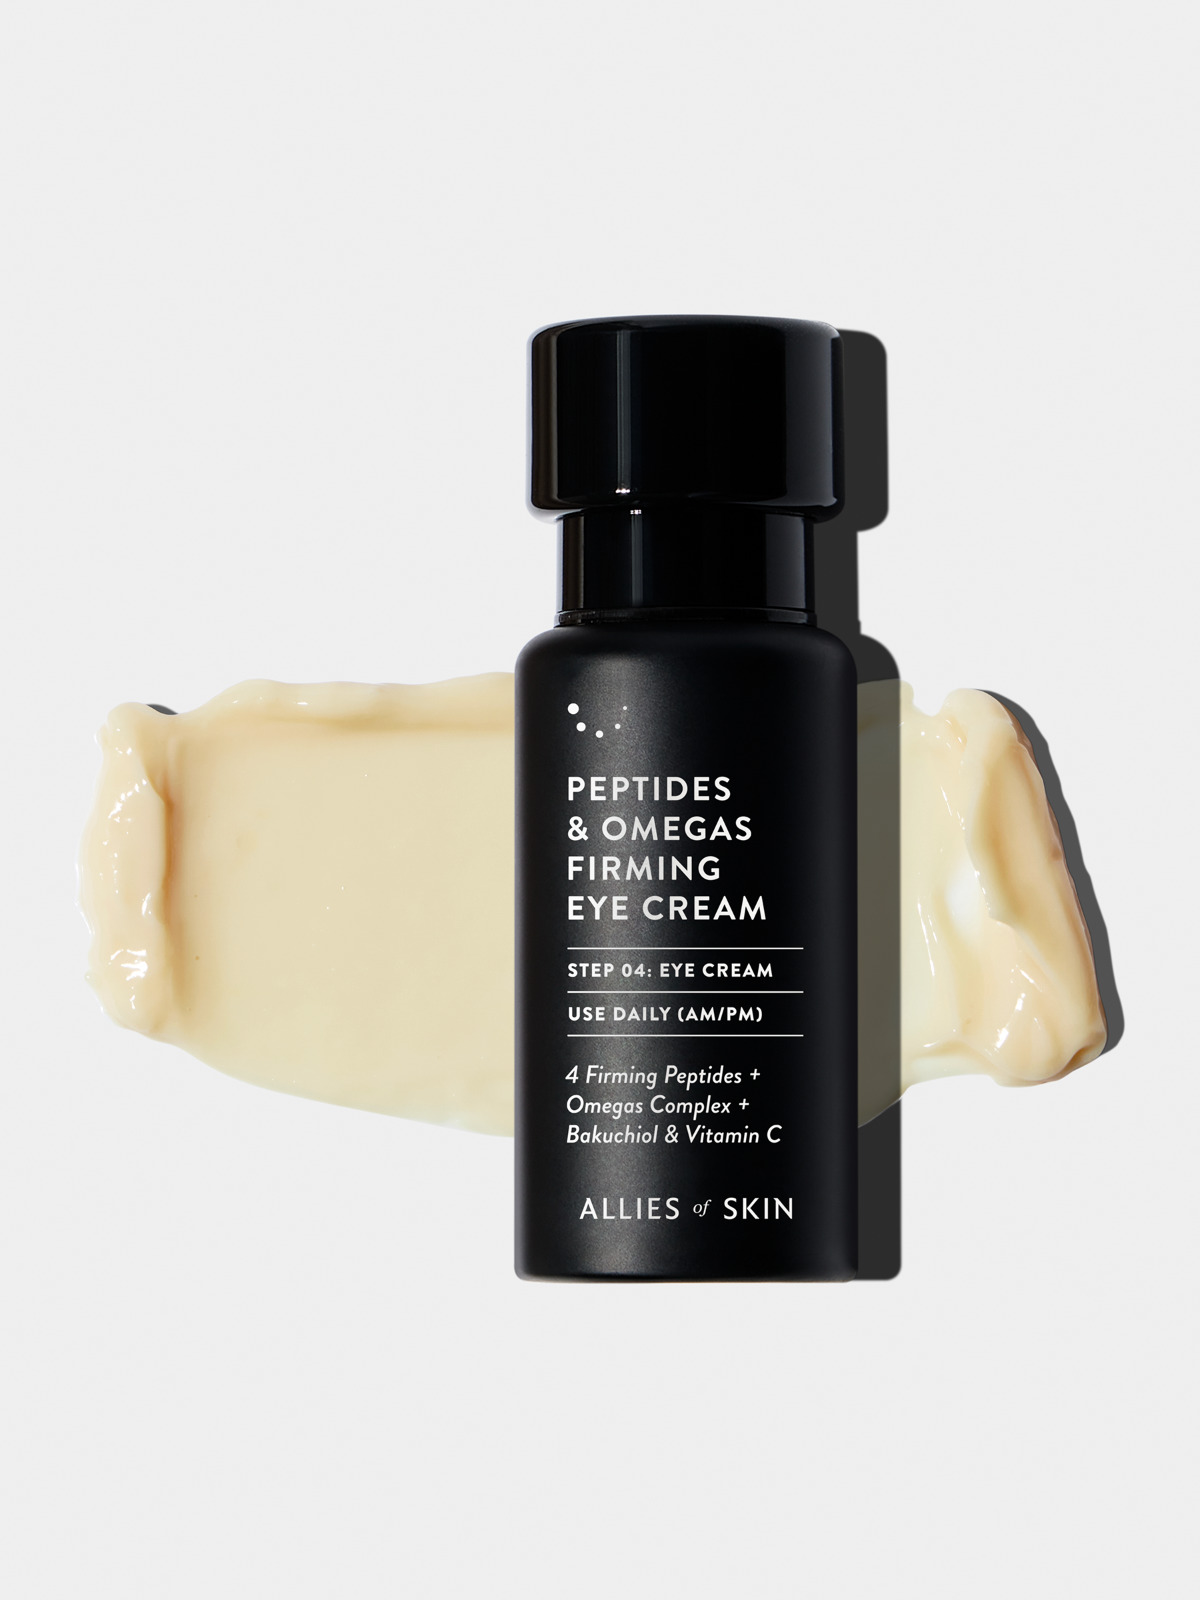 ALLIES of SKIN: Peptides & Omegas Firming Eye Cream